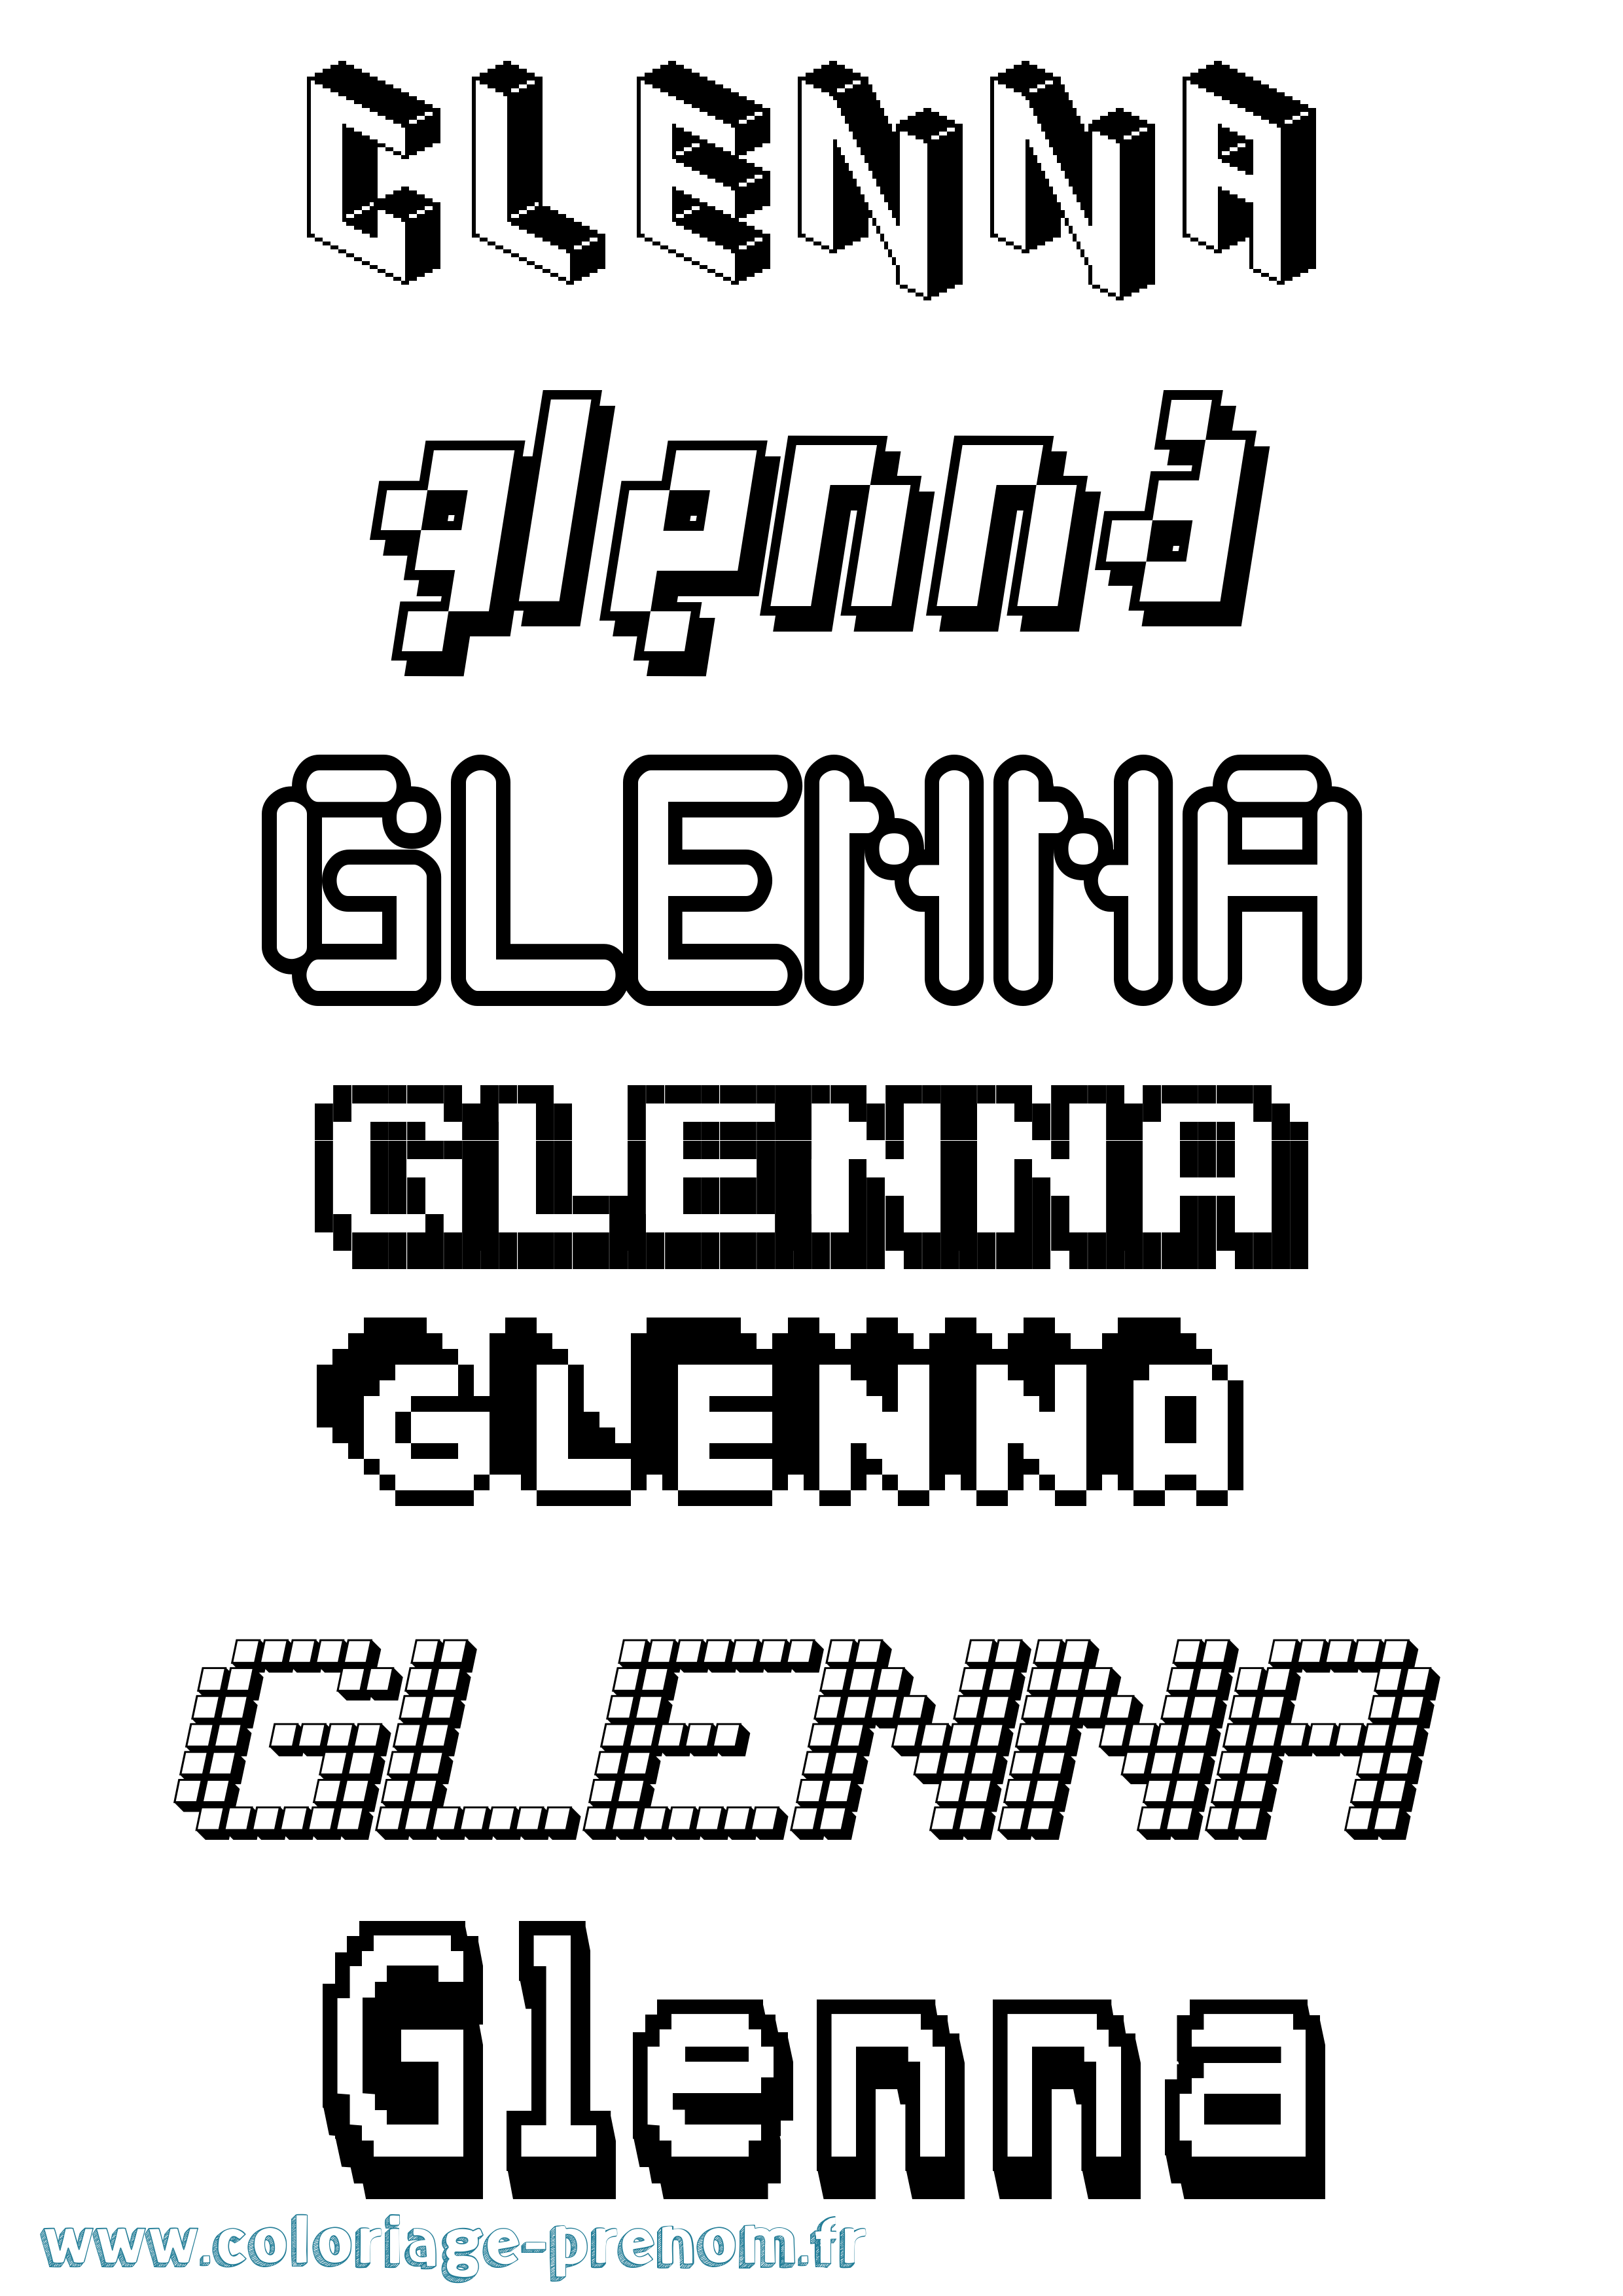 Coloriage prénom Glenna Pixel